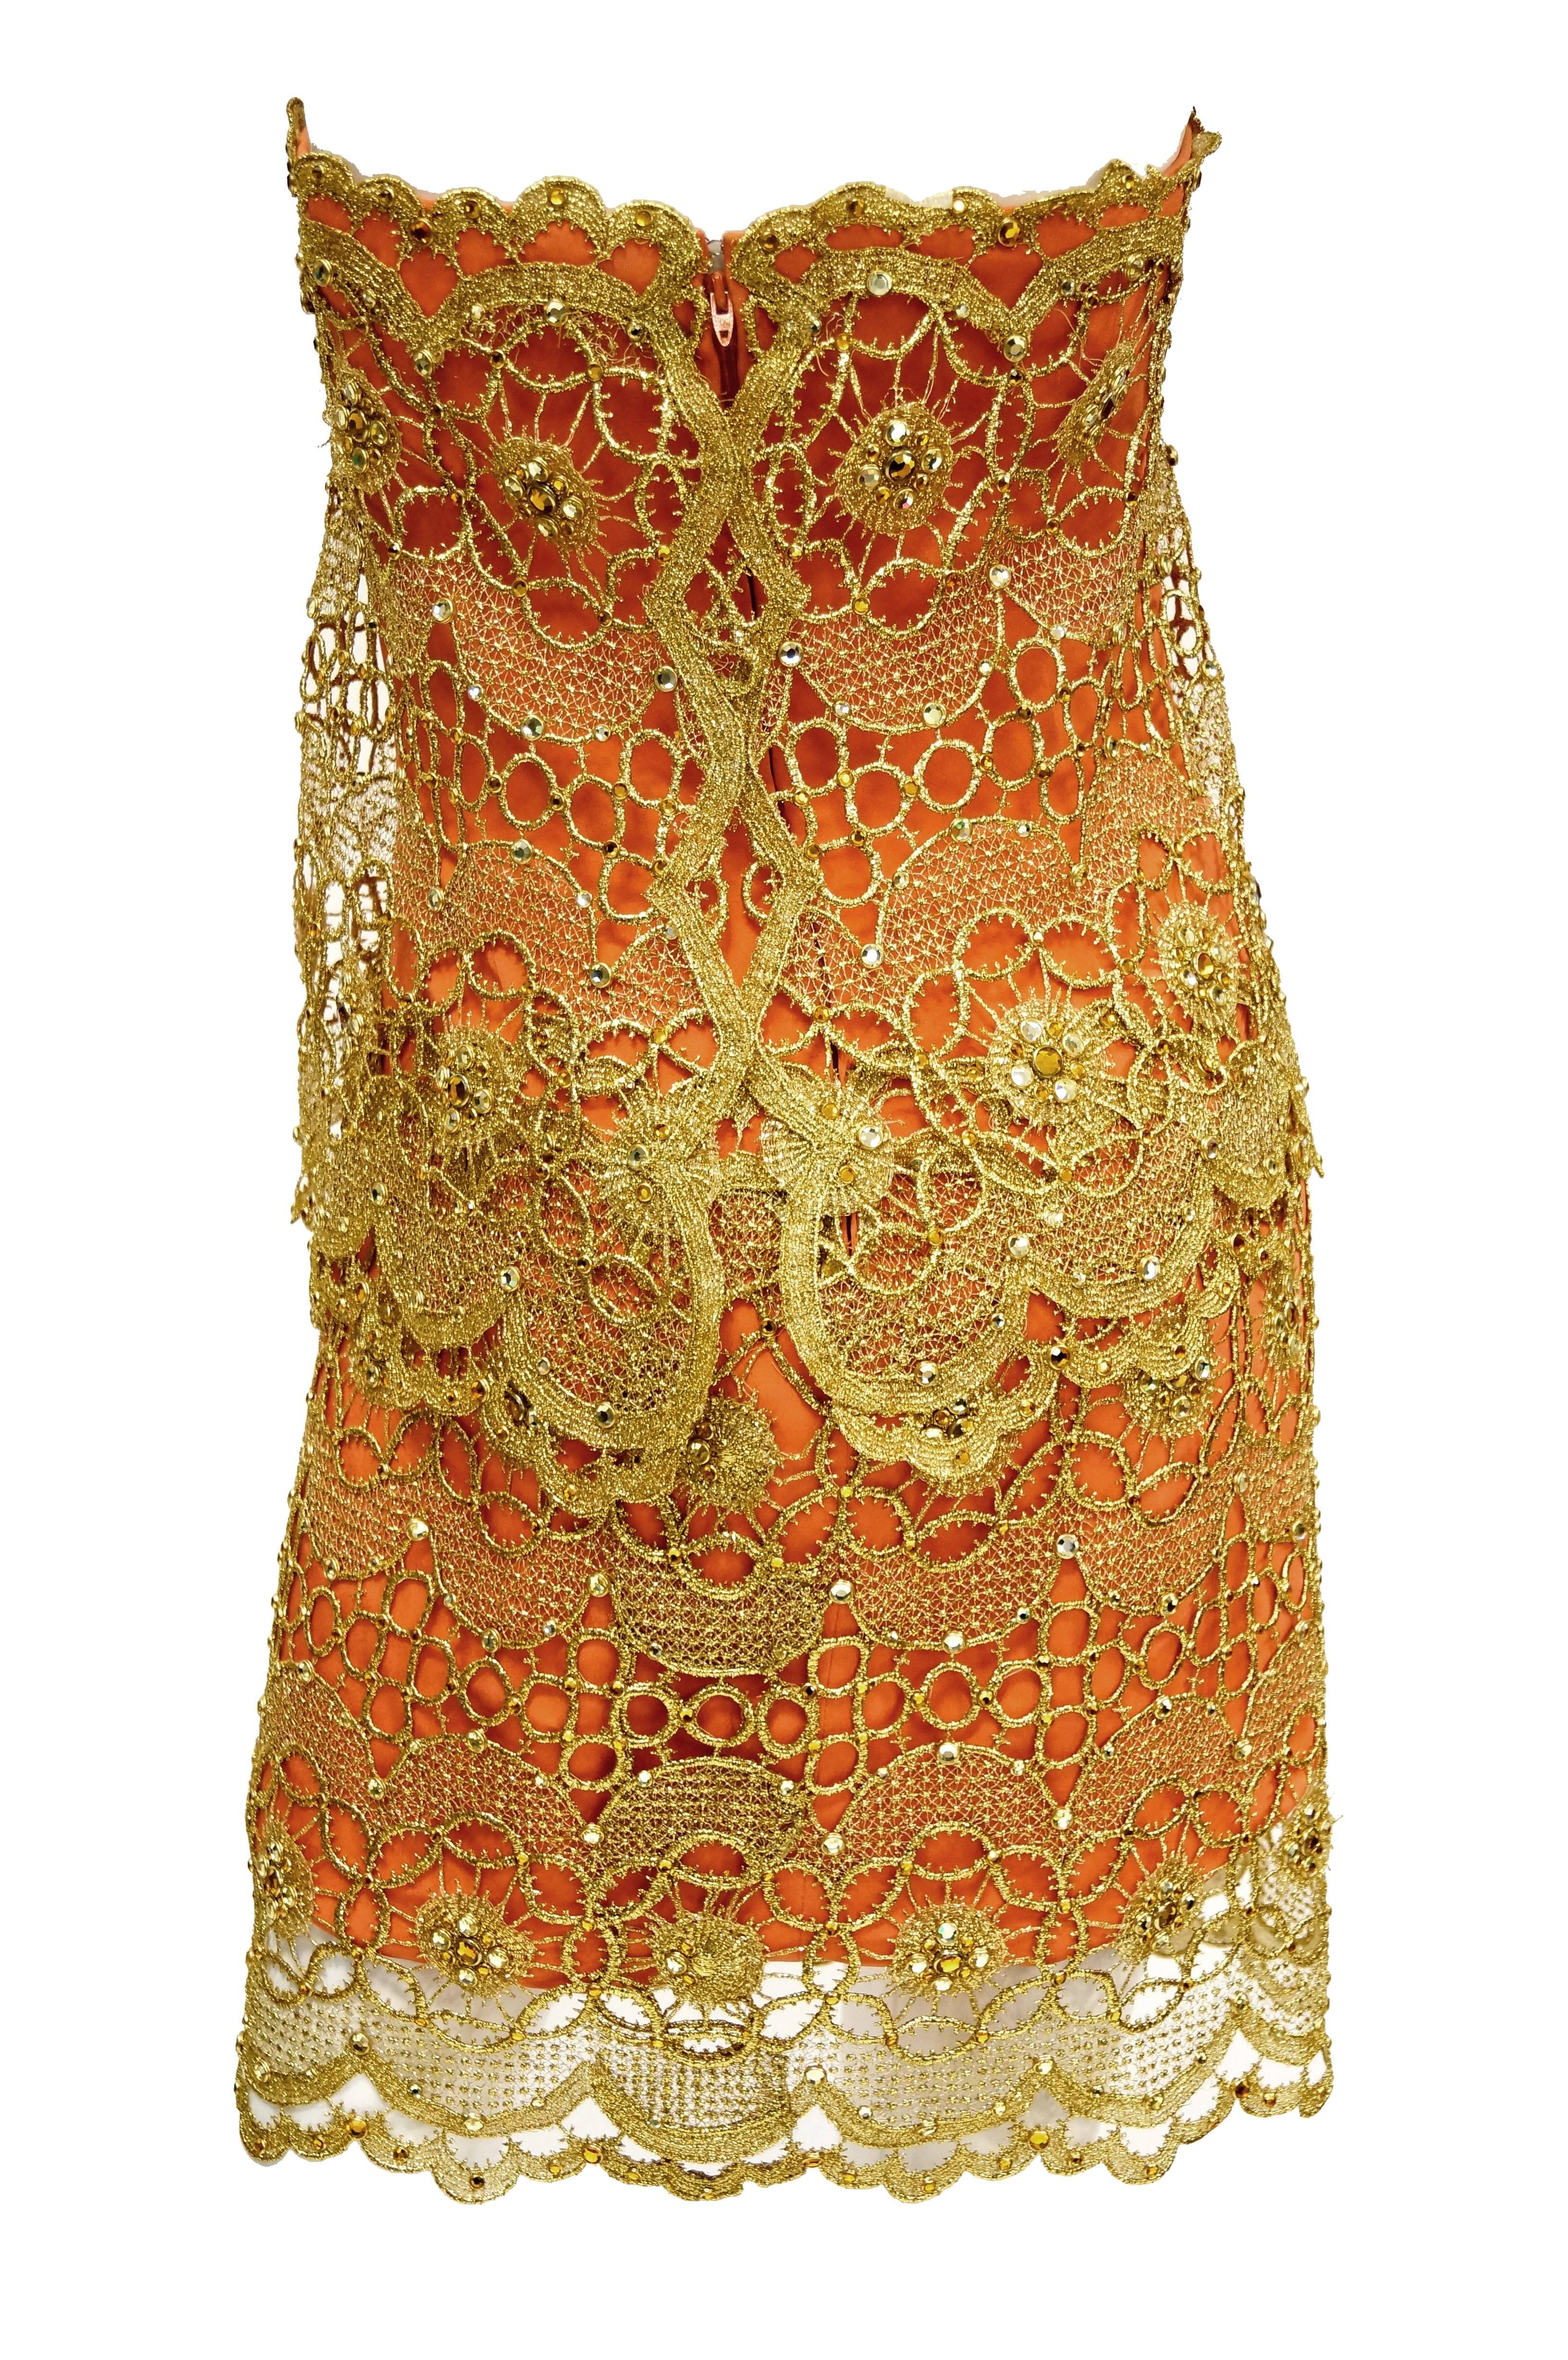 Bob Mackie Tangerine Gold Lace and Rhinestone Cocktail Dress,  1990s  2